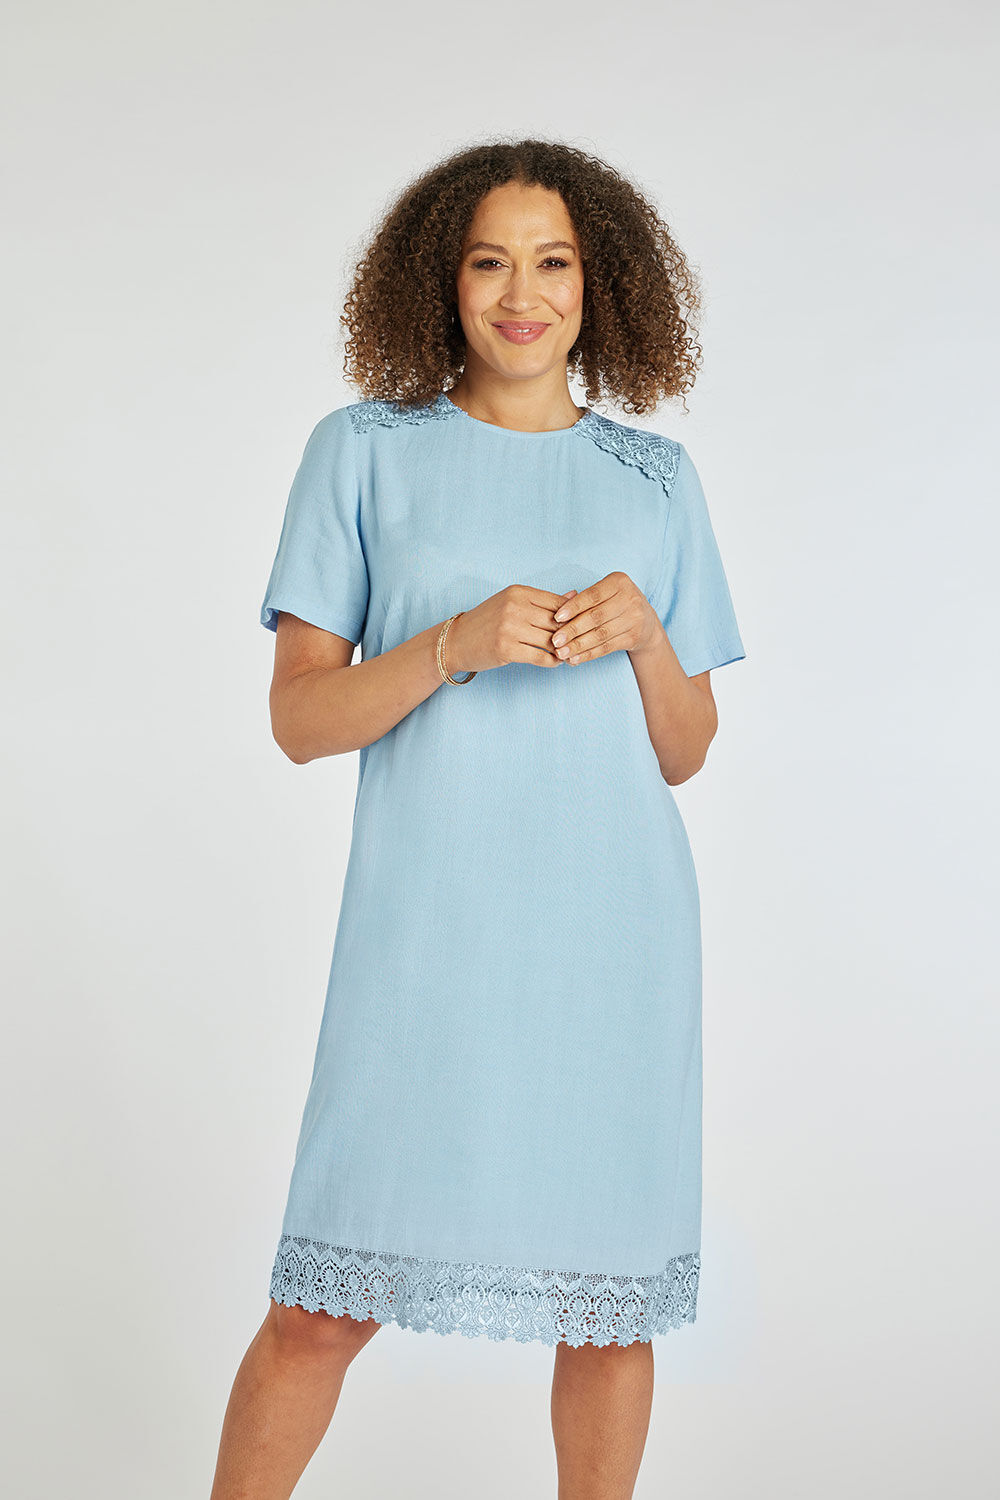 Bonmarche Women’s Light Blue Viscose Stylish Plain Shift Dress With Lace Trim, Size: 10